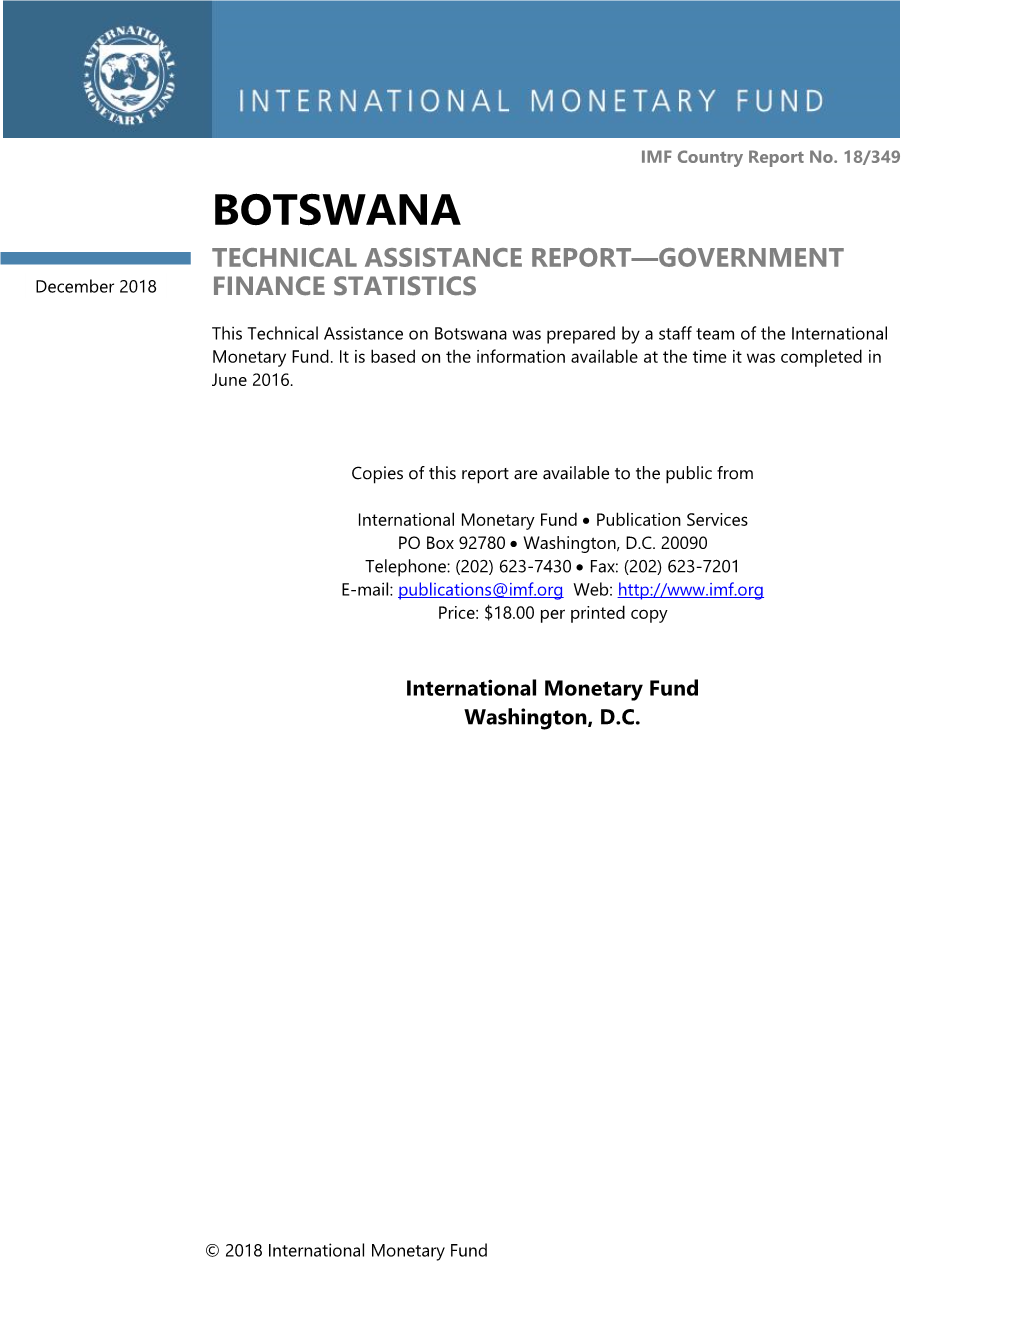 Botswana: Technical Assistance Report-Government Finance Statistics